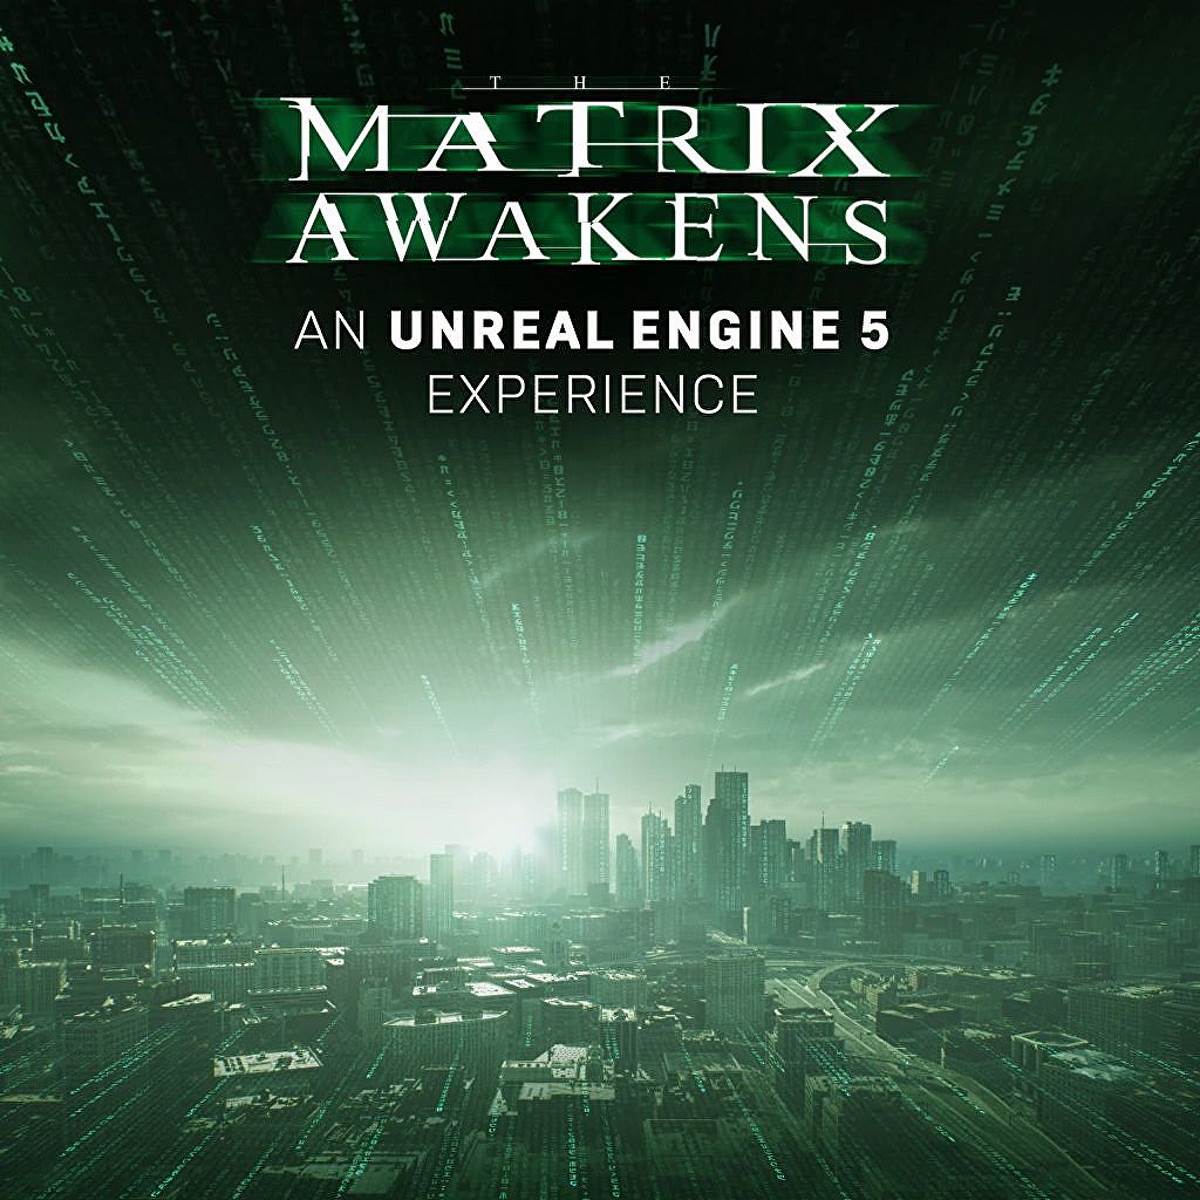  The Matrix Awakens 1.jpg 